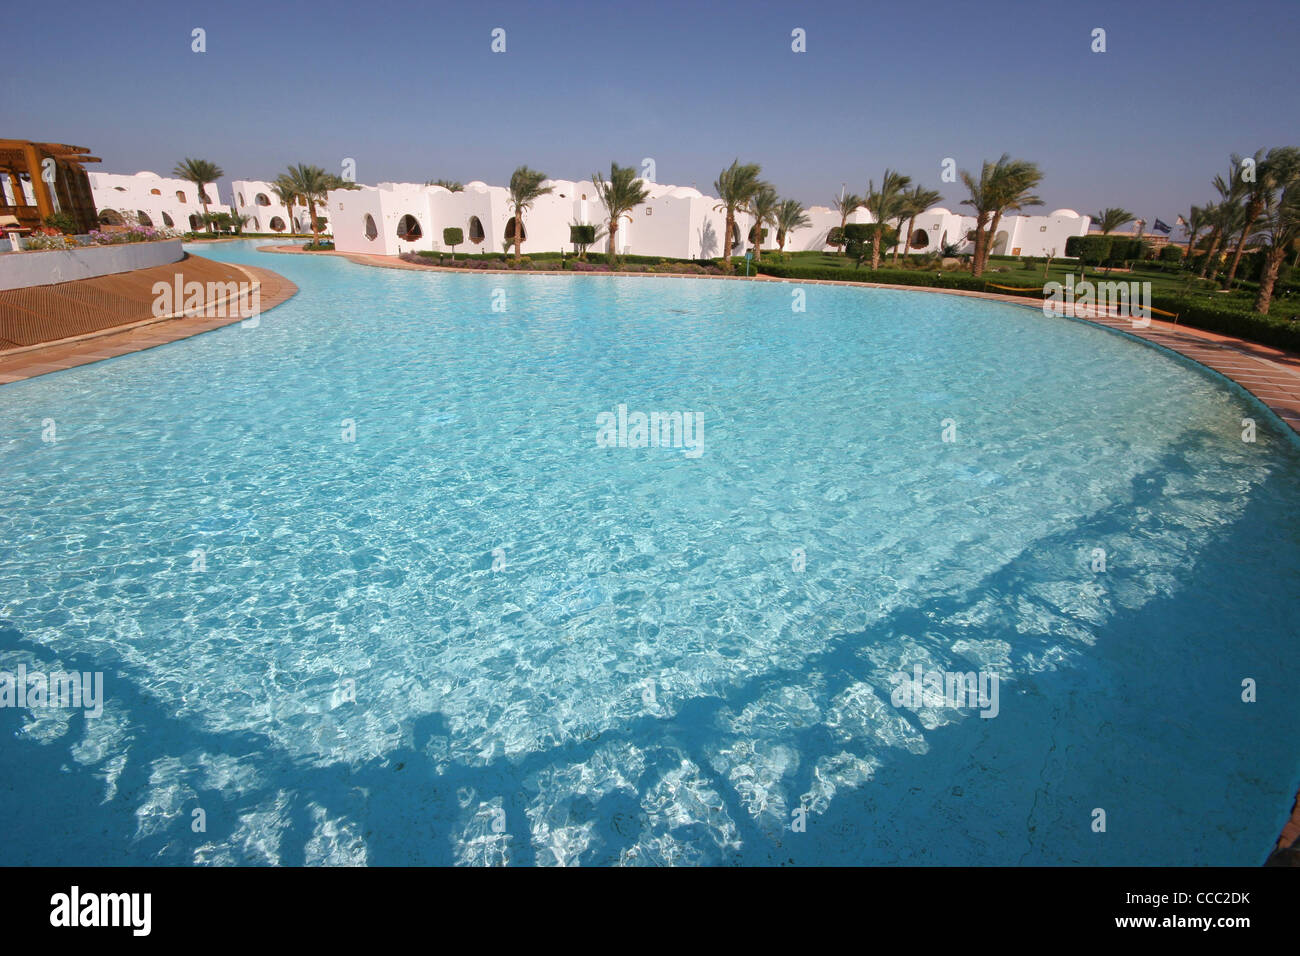 Pool, Hilton hotel, Dahab, Egypt, North Africa, Africa Stock Photo